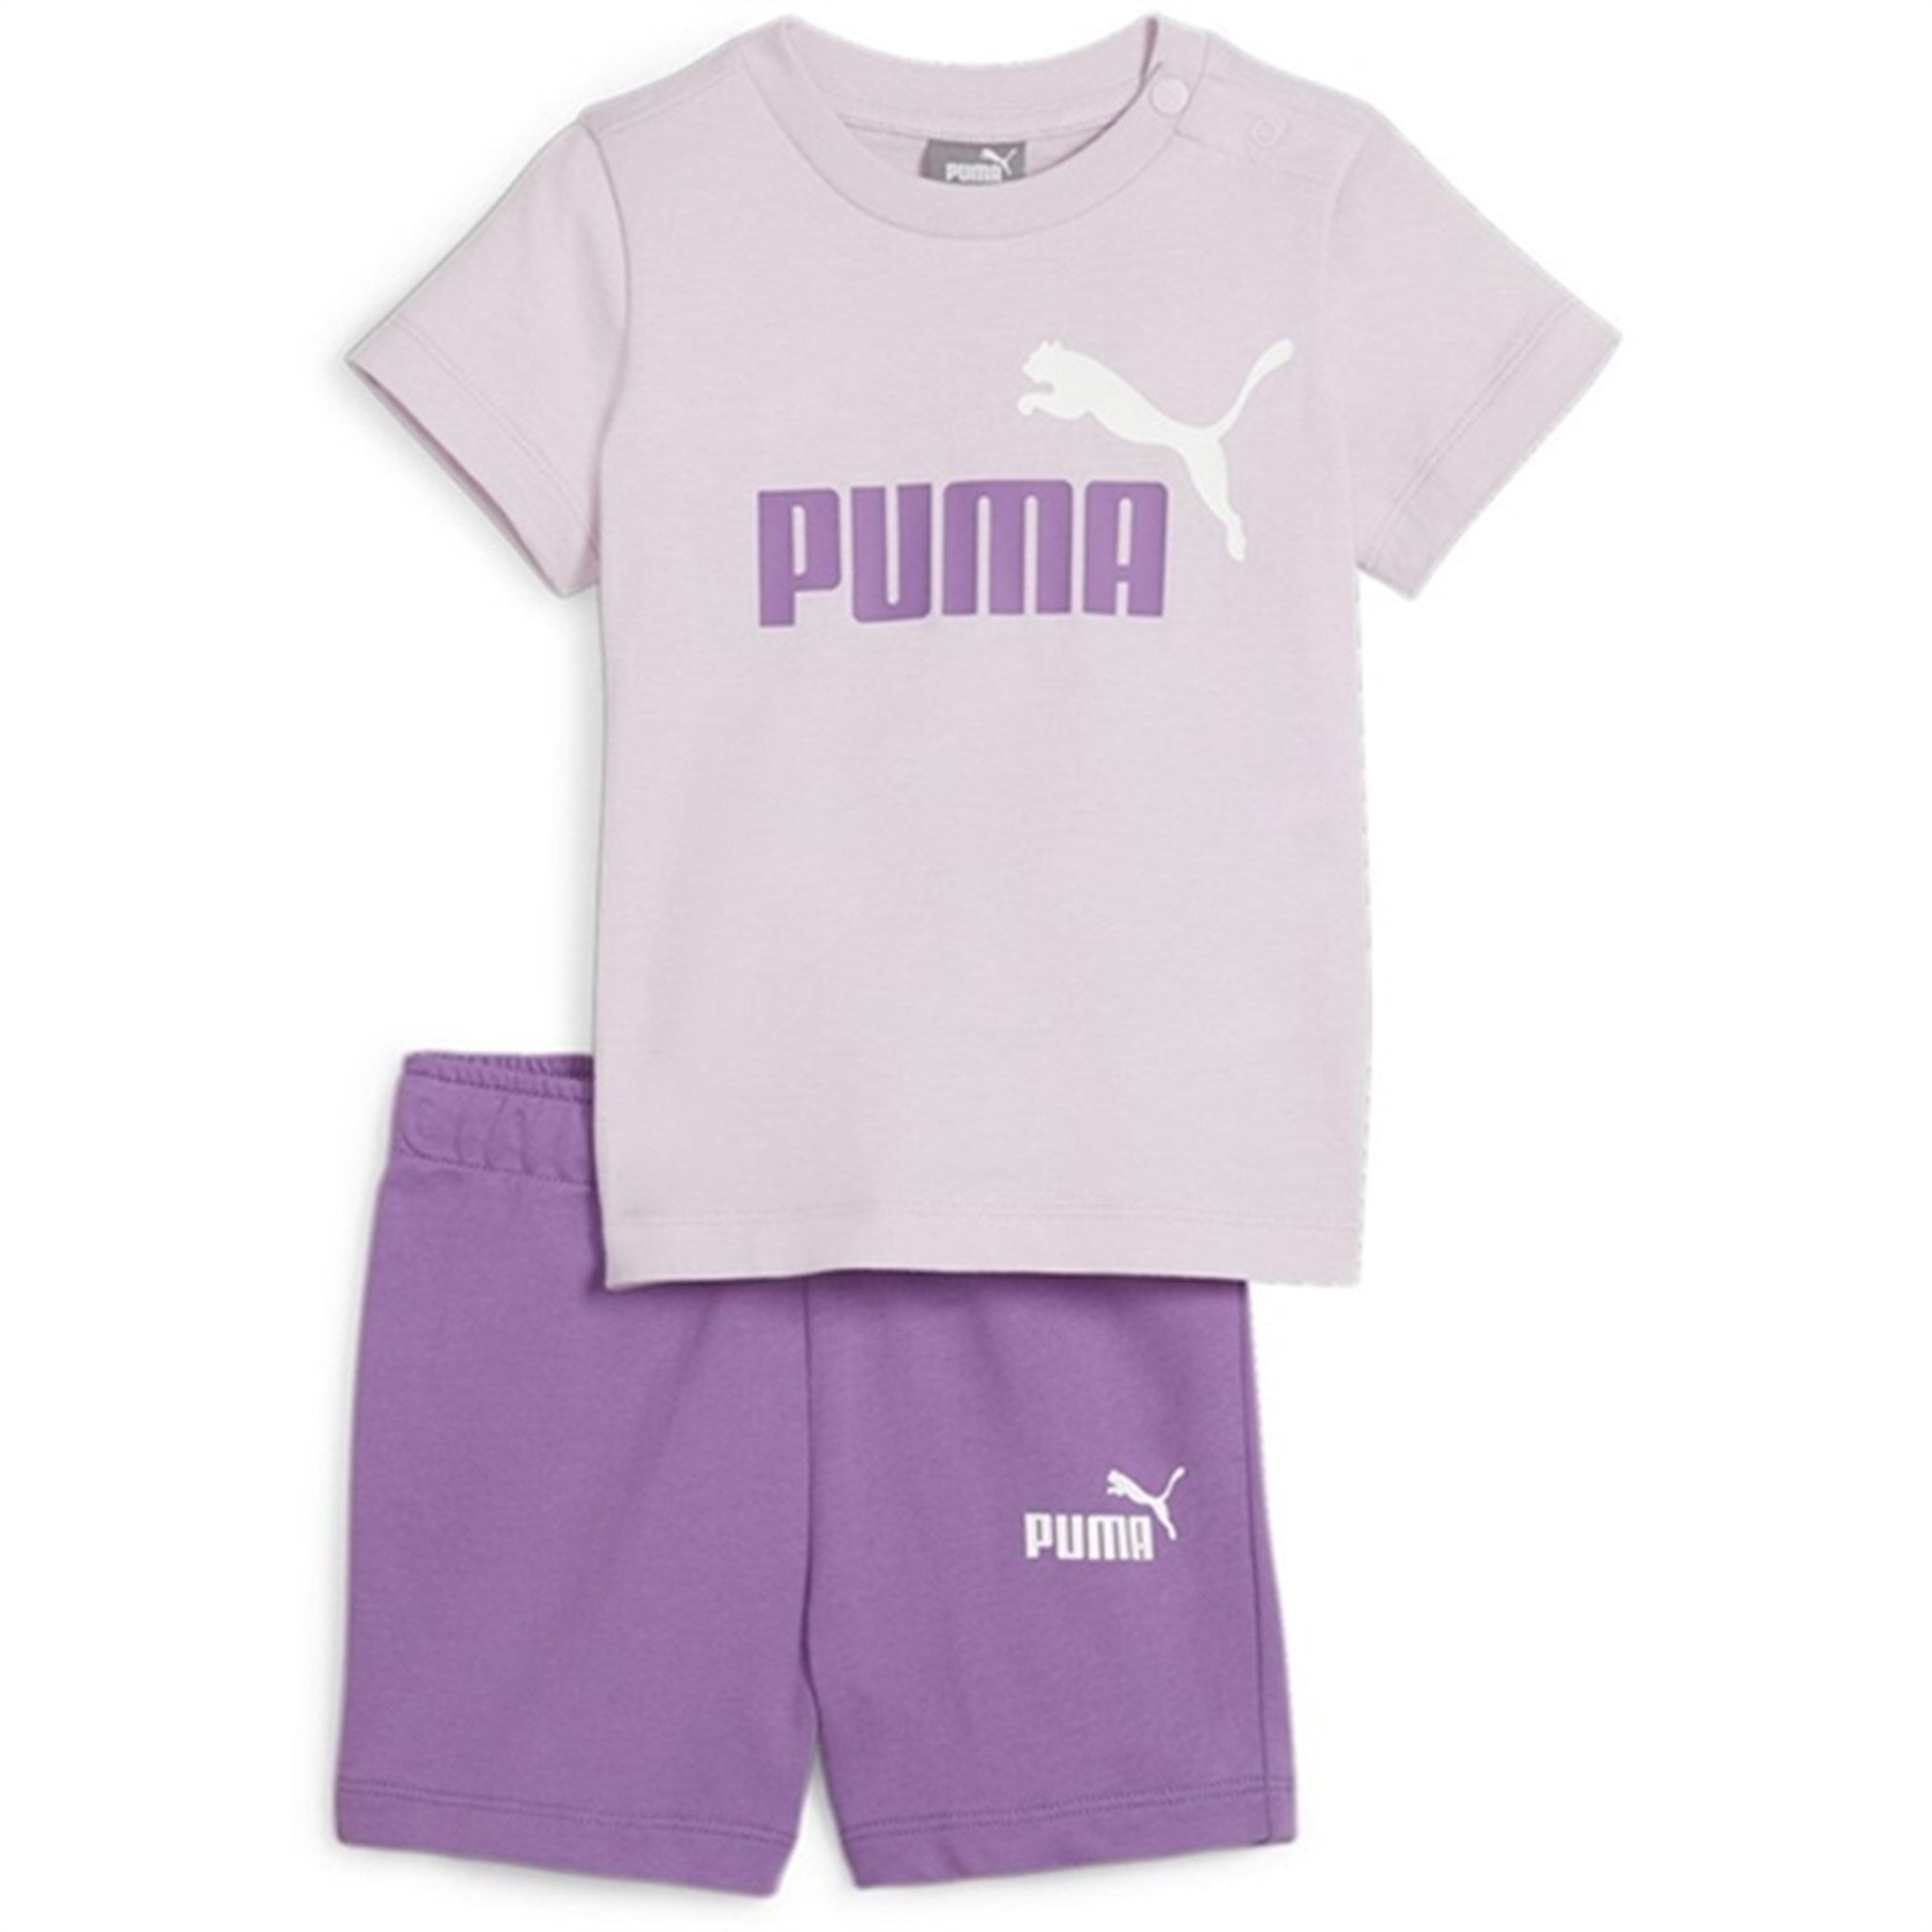 Puma Minicats T-Shirt Og Shorts Sæt Purple - Str. 86